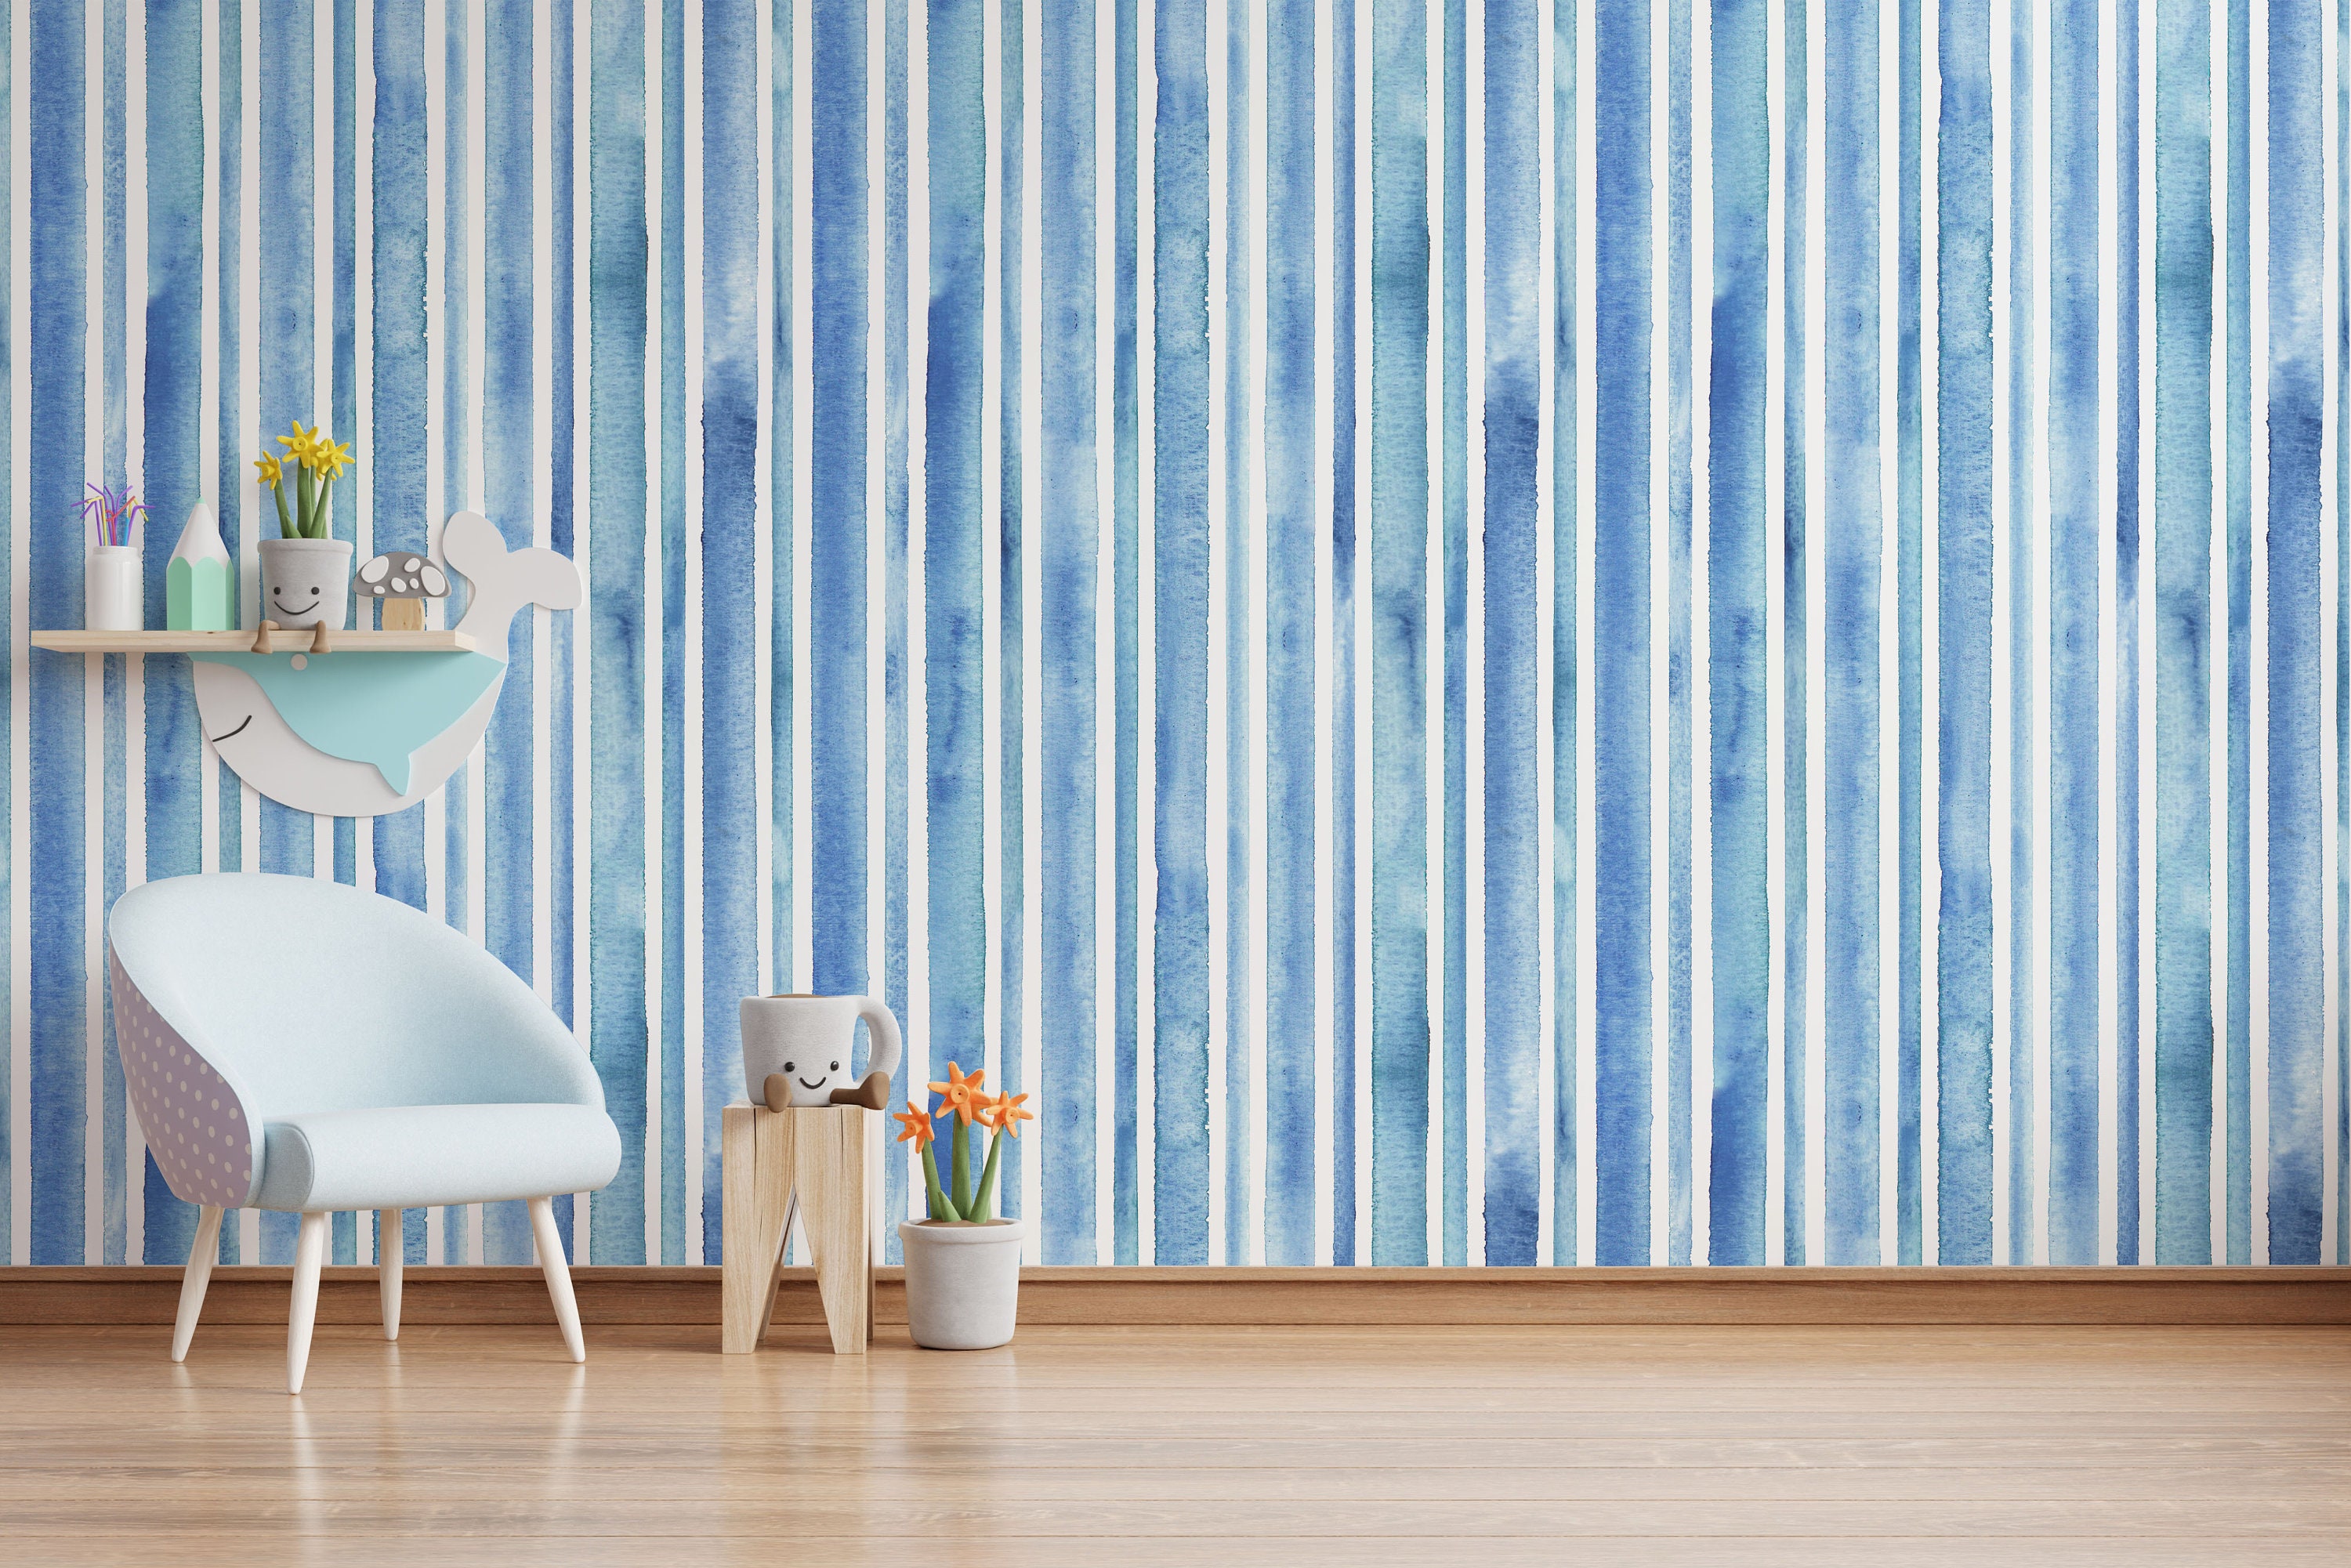 1161125 Blue Striped Wallpaper Images Stock Photos  Vectors   Shutterstock